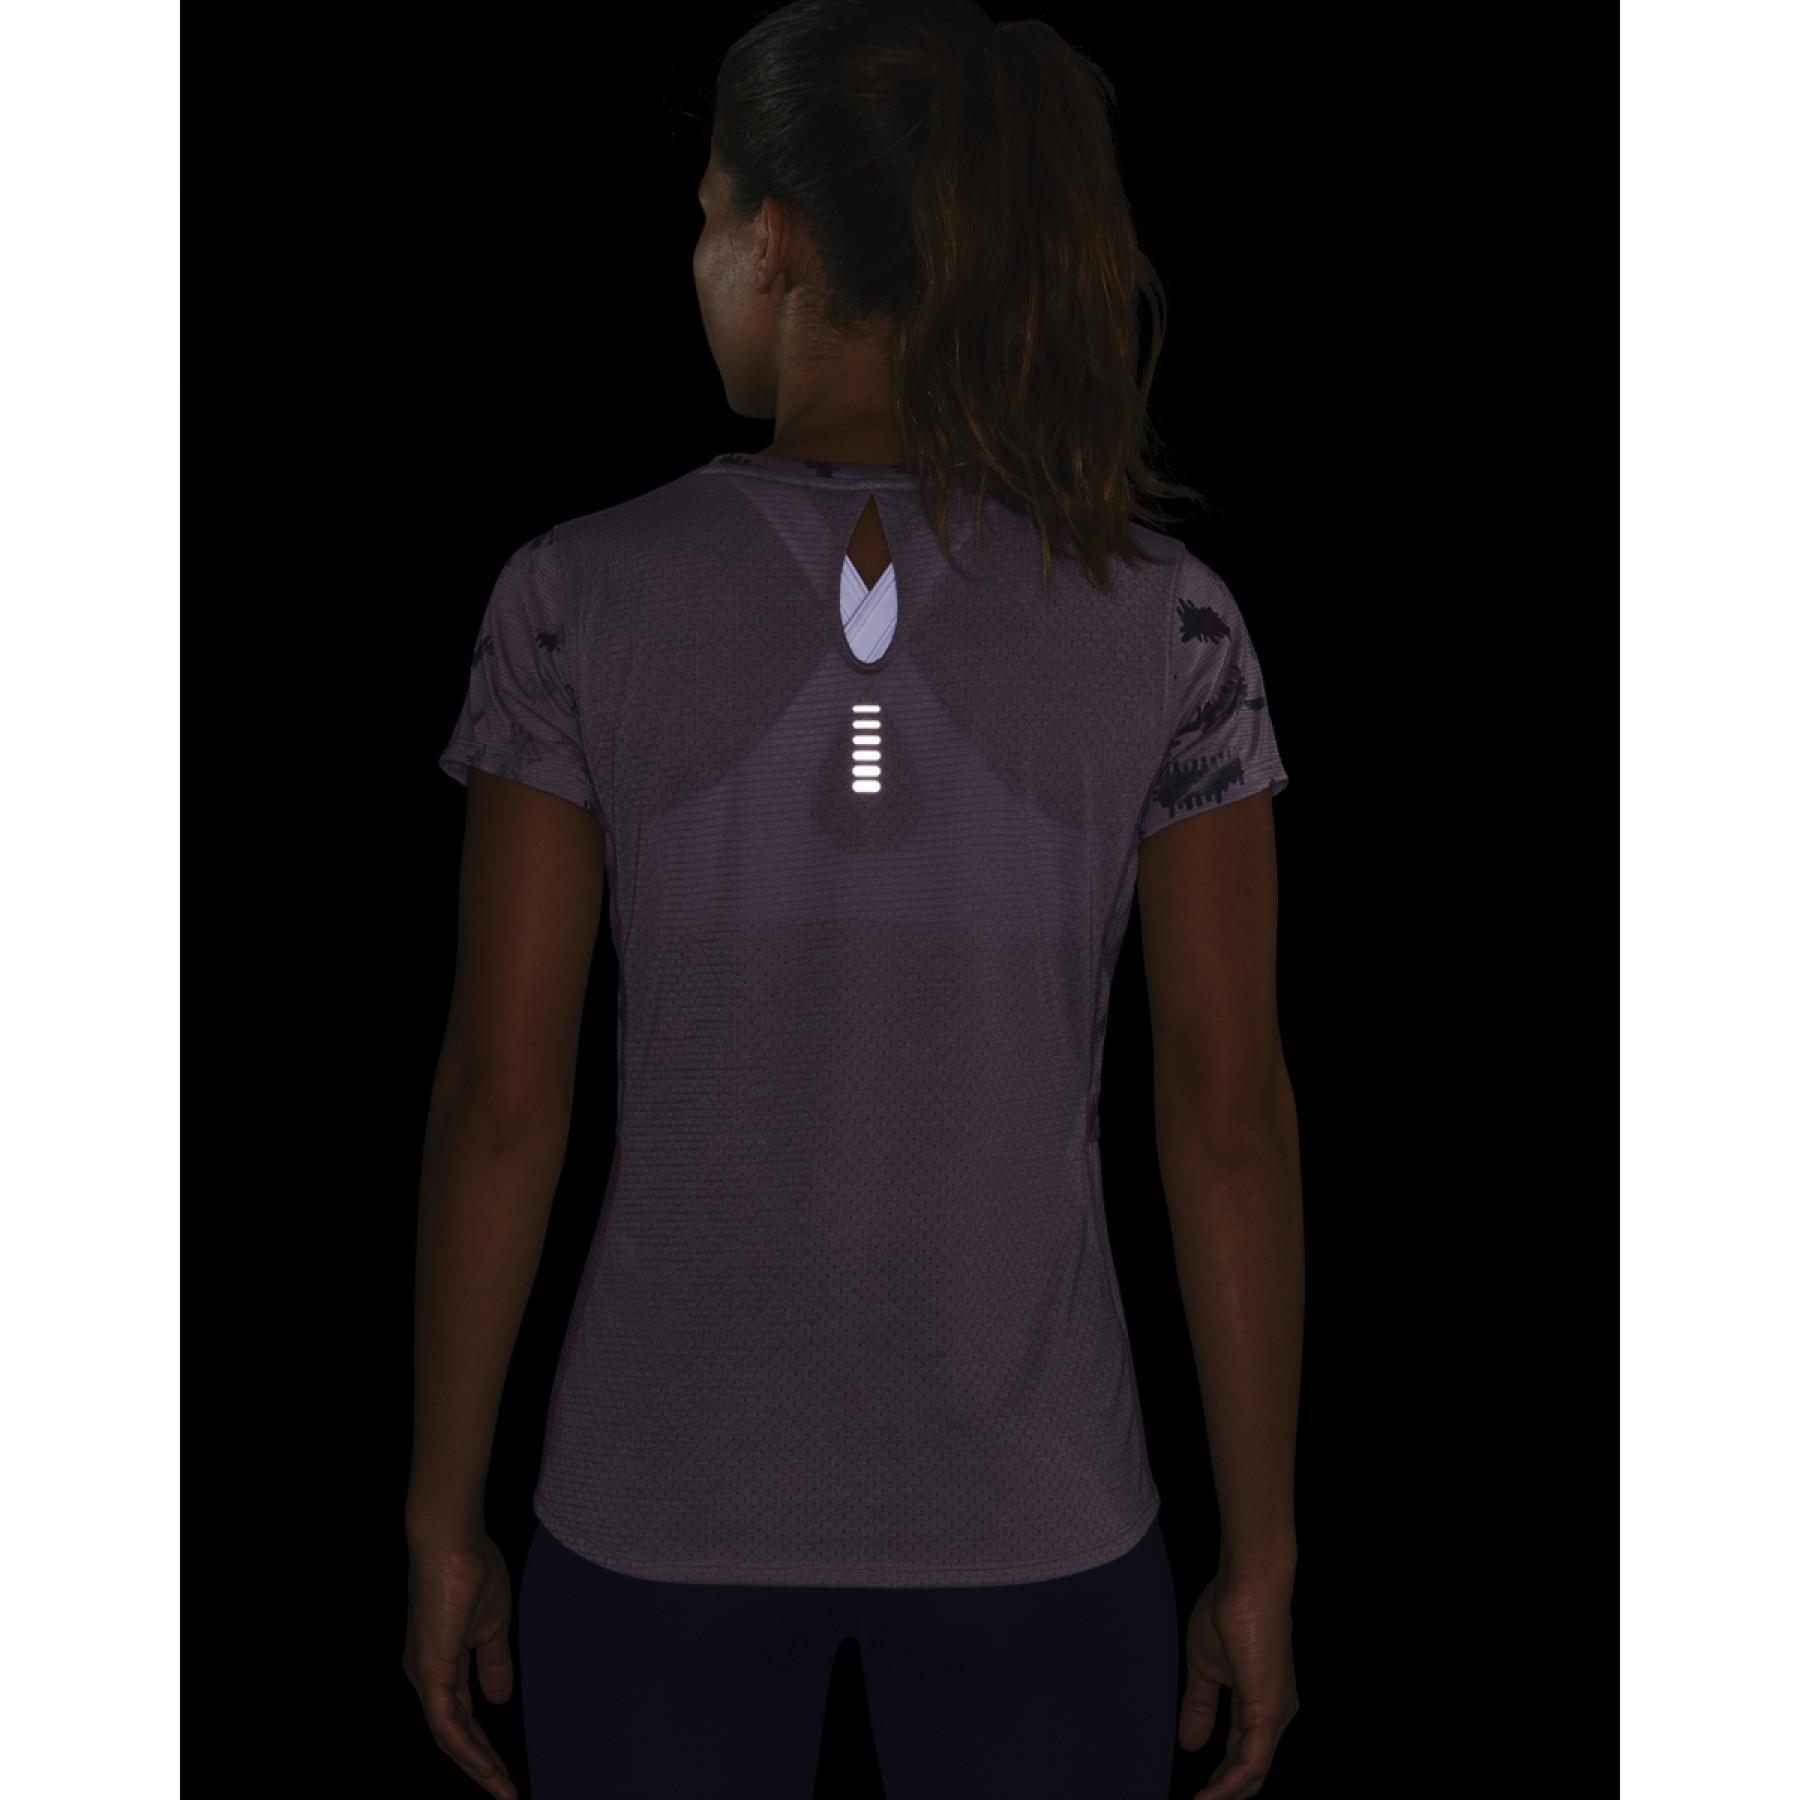 Frauen-T-Shirt Under Armour à manches courtes Streaker 2.0 Inverse